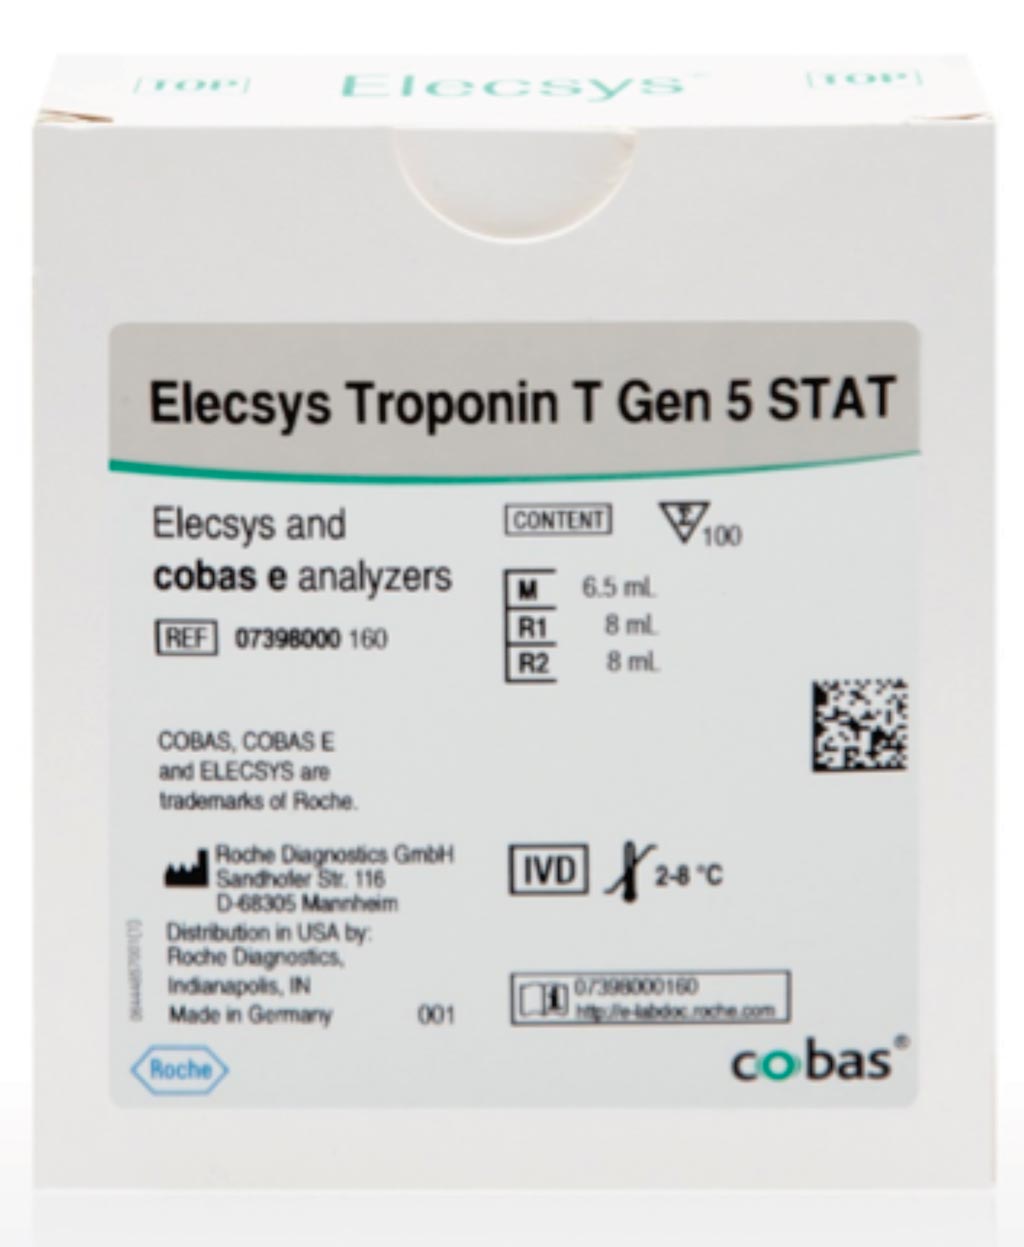 Image: The Elecsys Troponin T Gen 5 STAT assay (Photo courtesy of Roche Diagnostics).